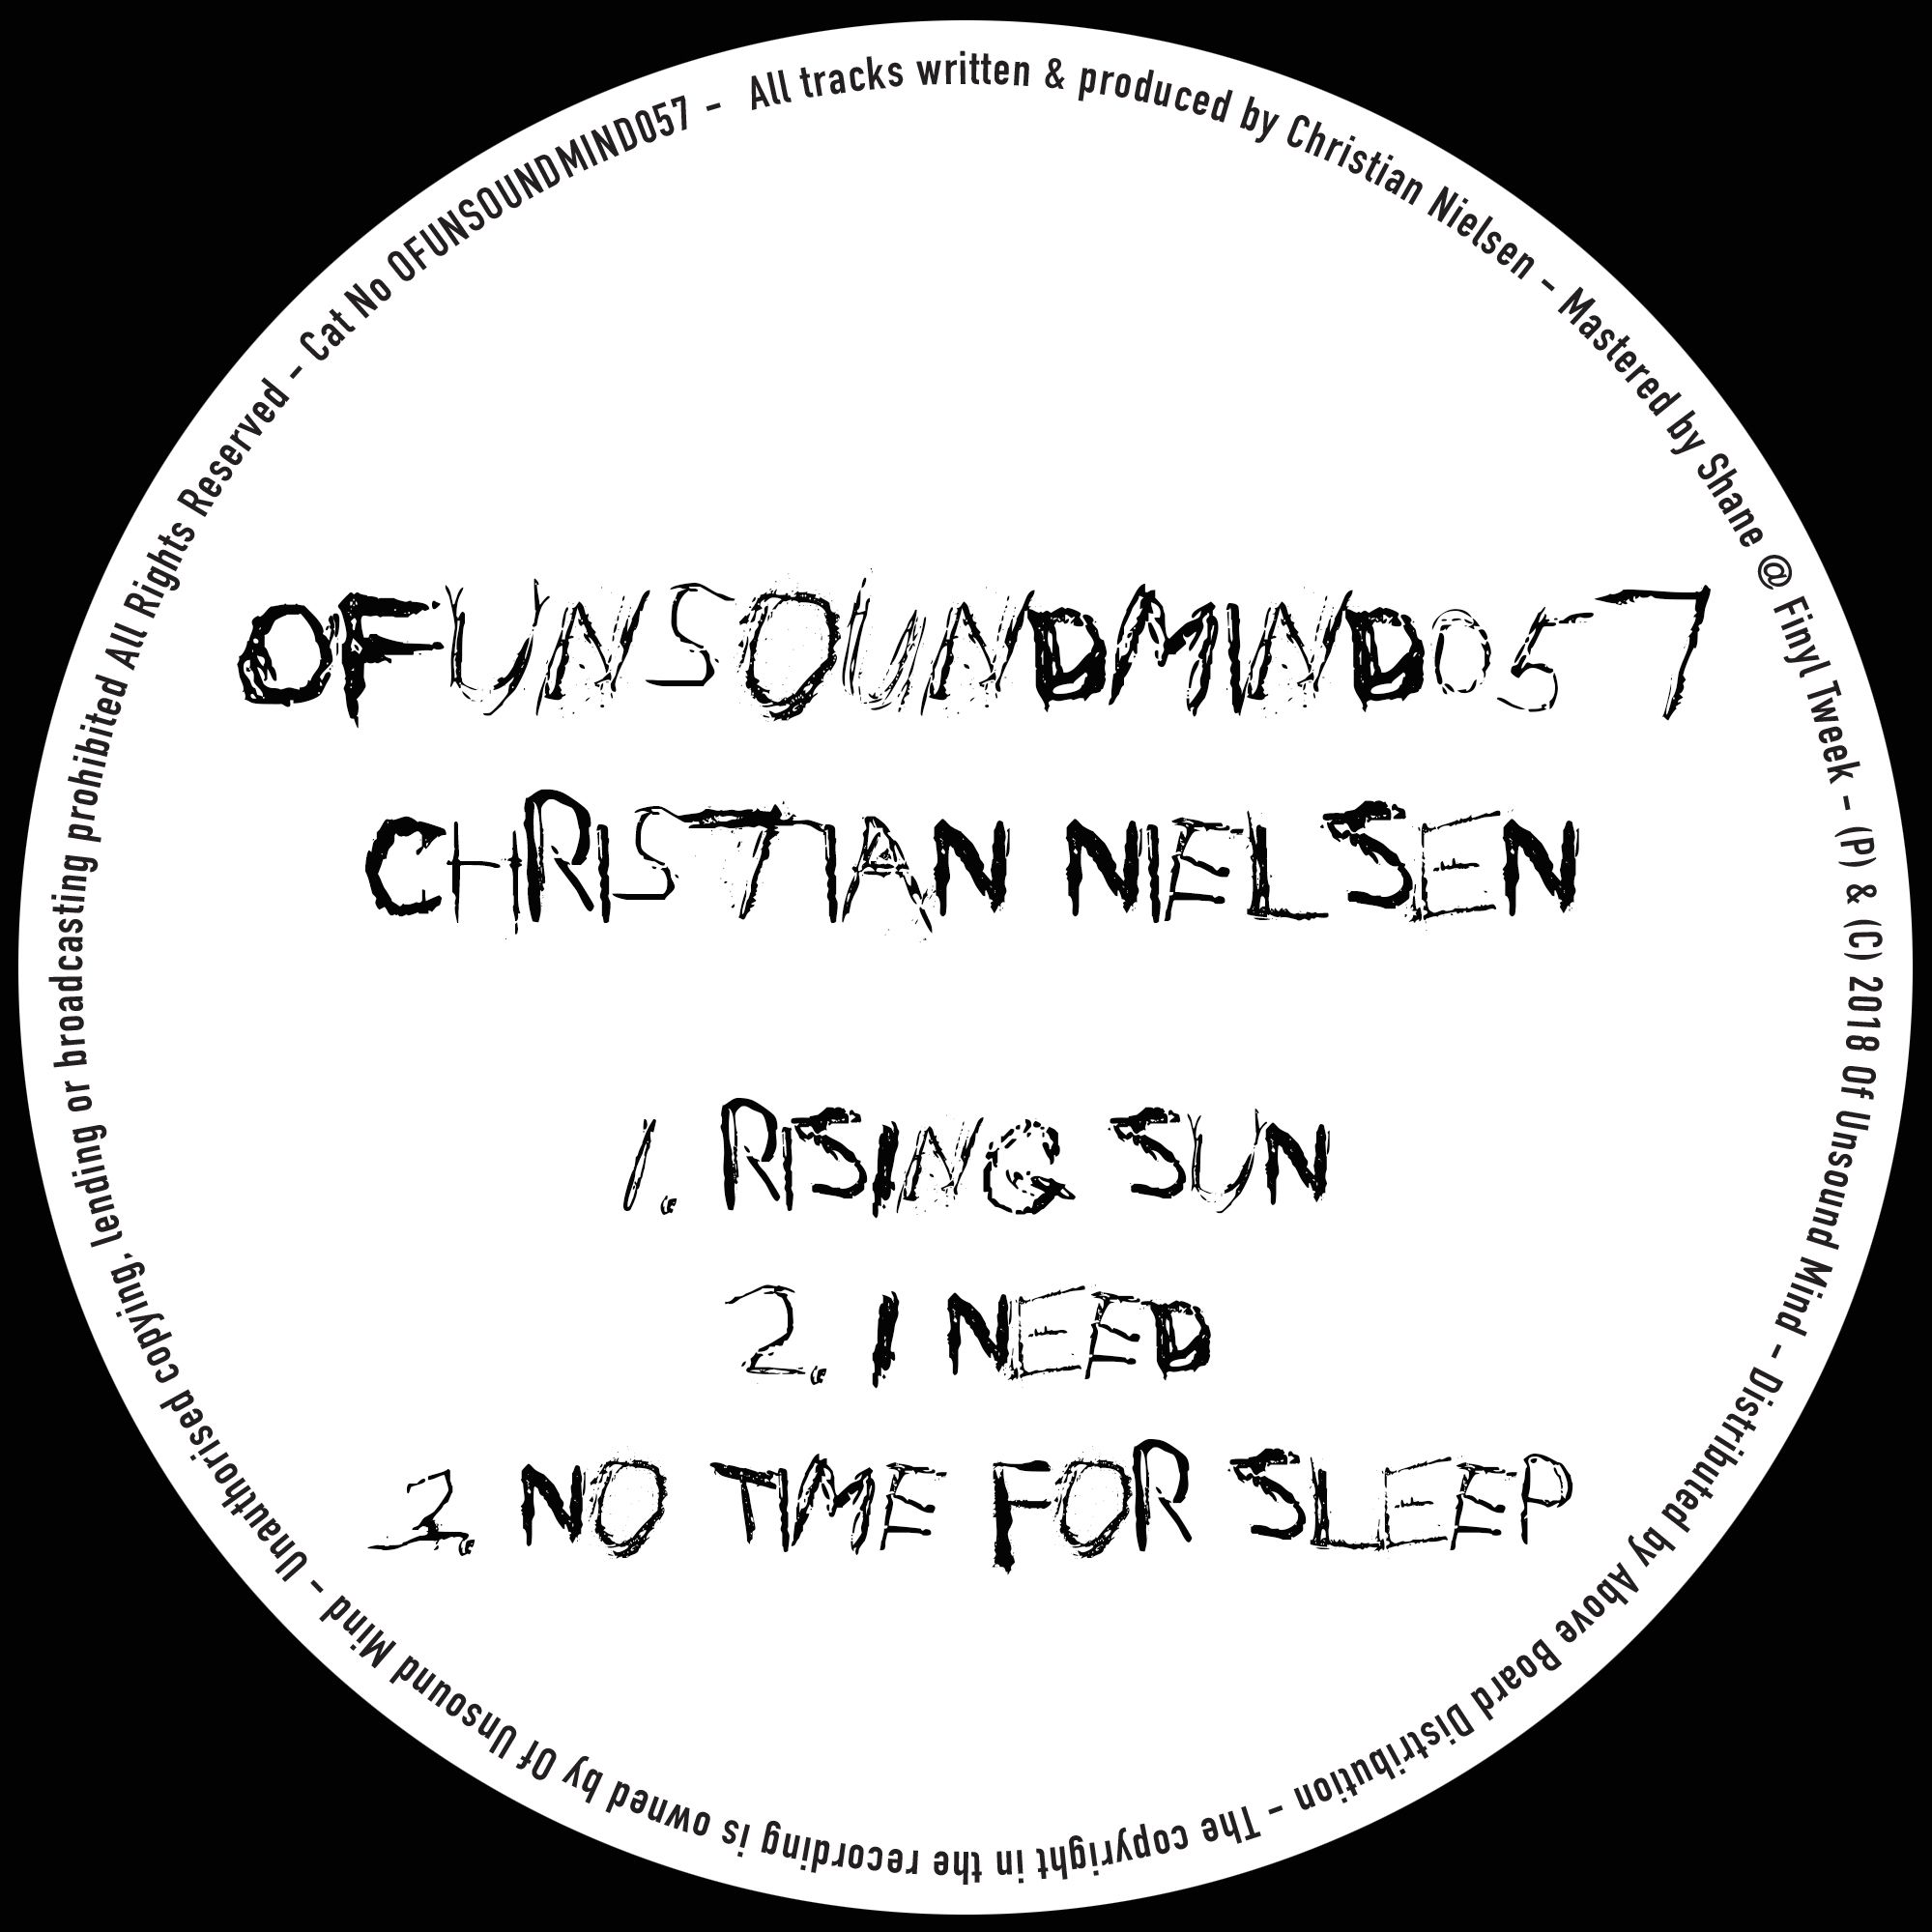 Sii mai Christian Nielsen - No Time For Sleep